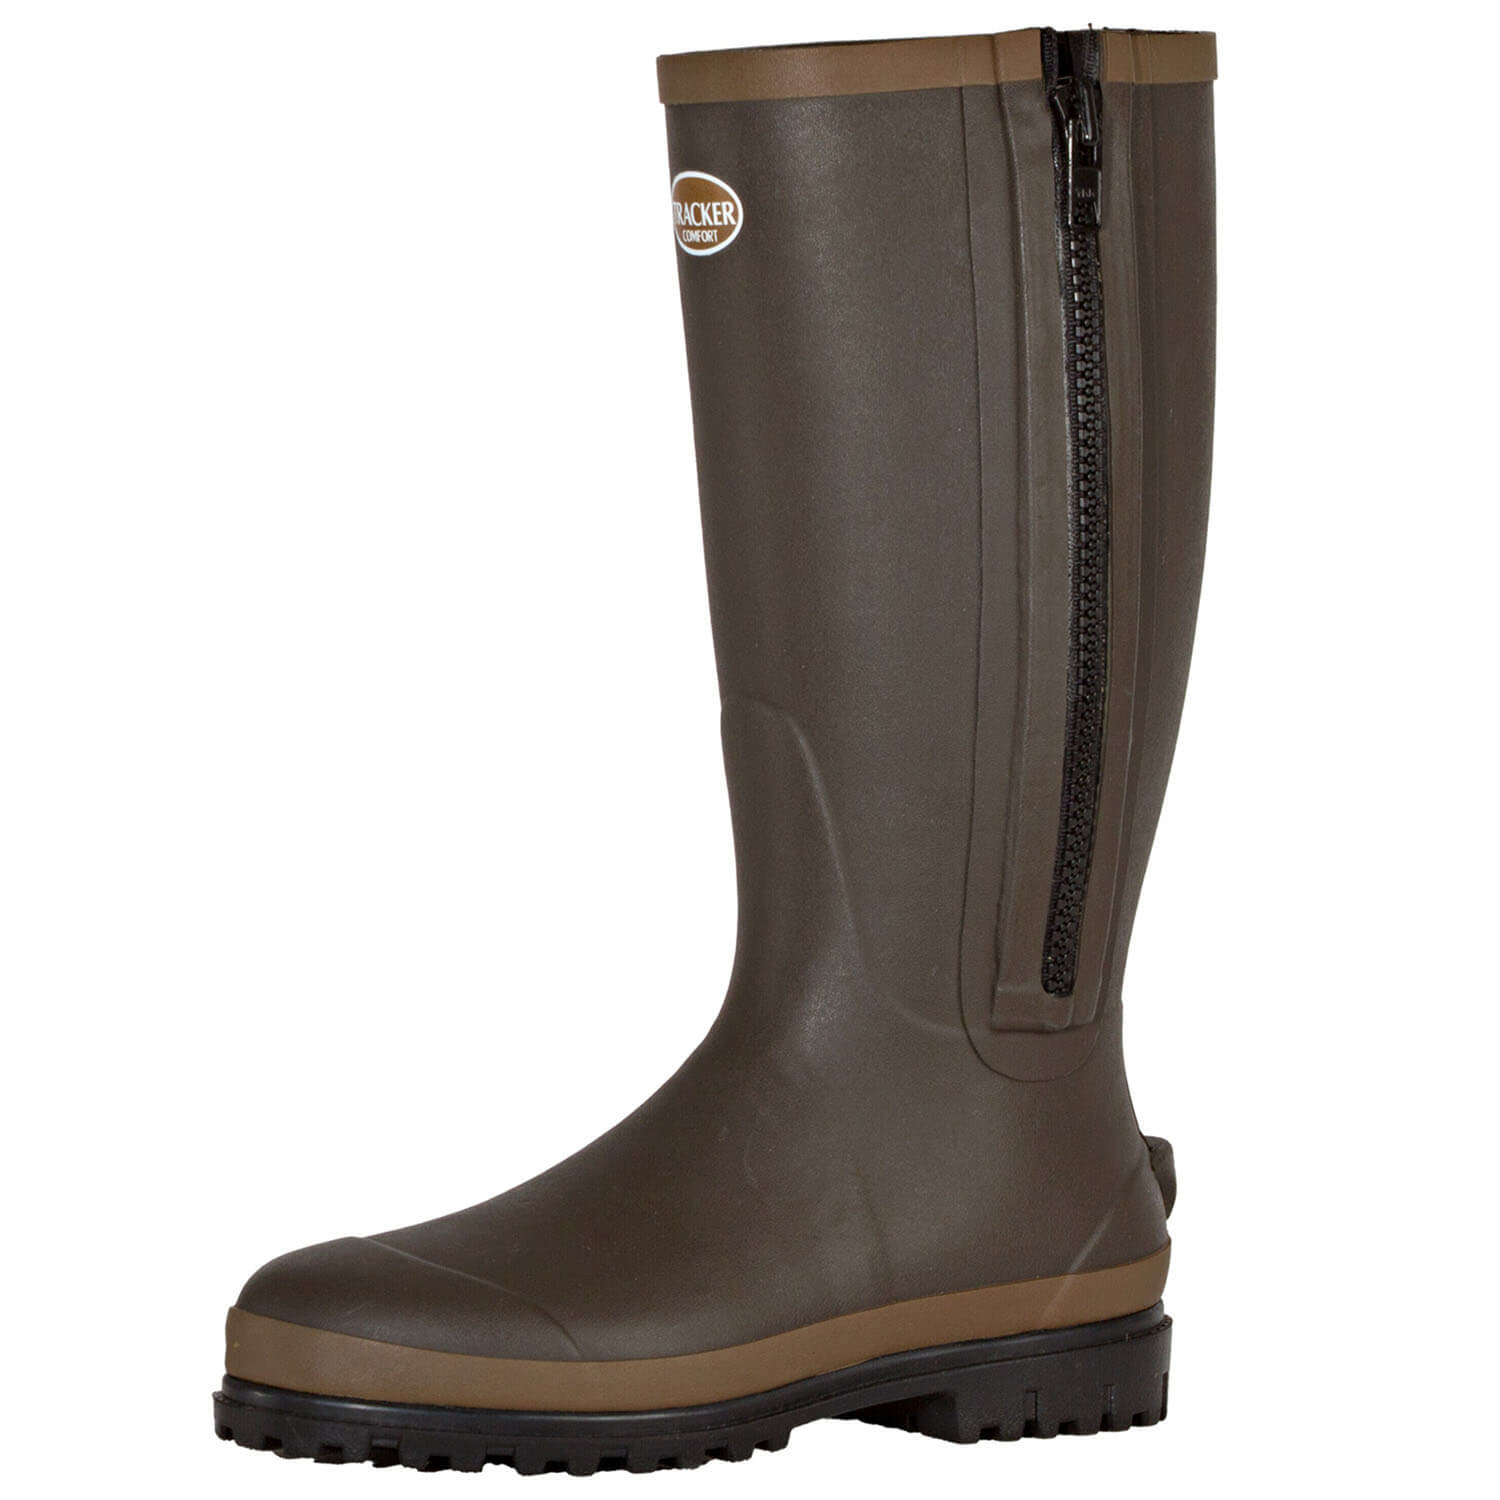 Tracker Rubber Boots Comfort Neopren (brown) - Rubber Boots